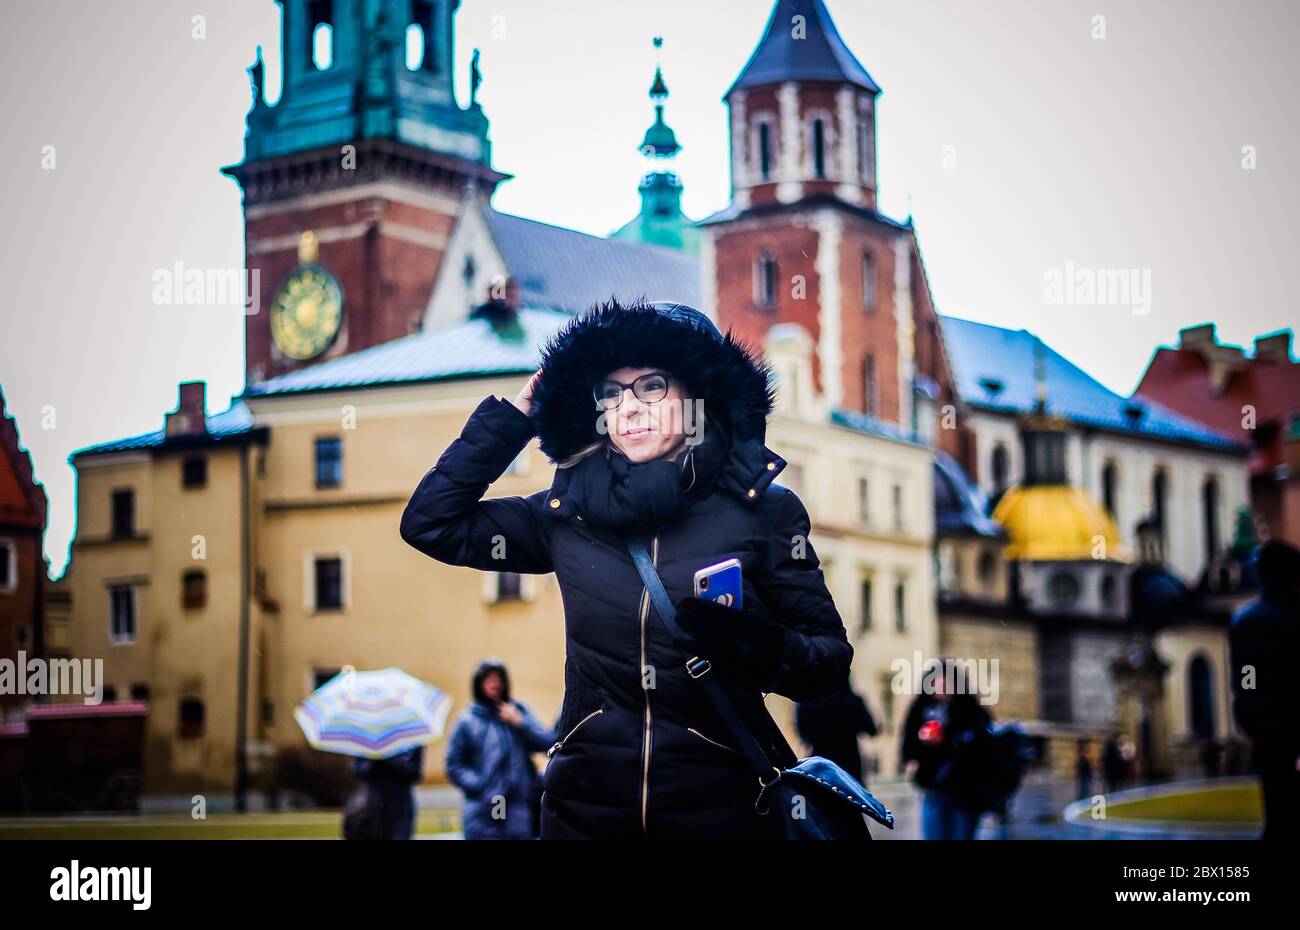 Woman walking down Royal Wawel Castle - Krakow - Poland - Europe Stock Photo